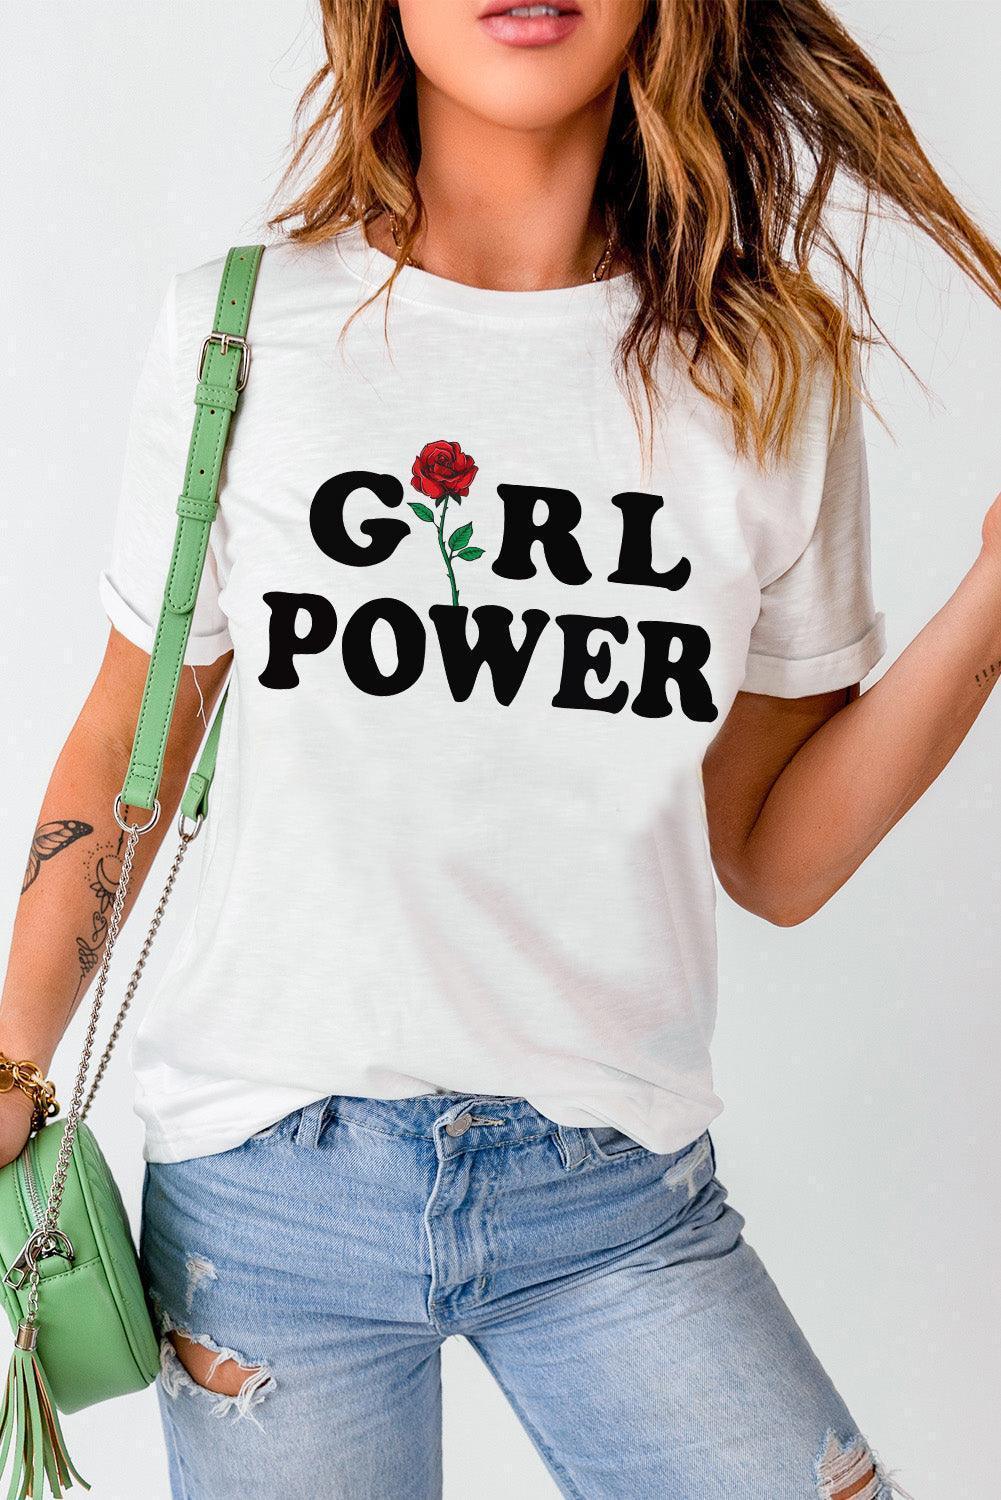 GIRL POWER Rose White Graphic Tee - MXSTUDIO.COM